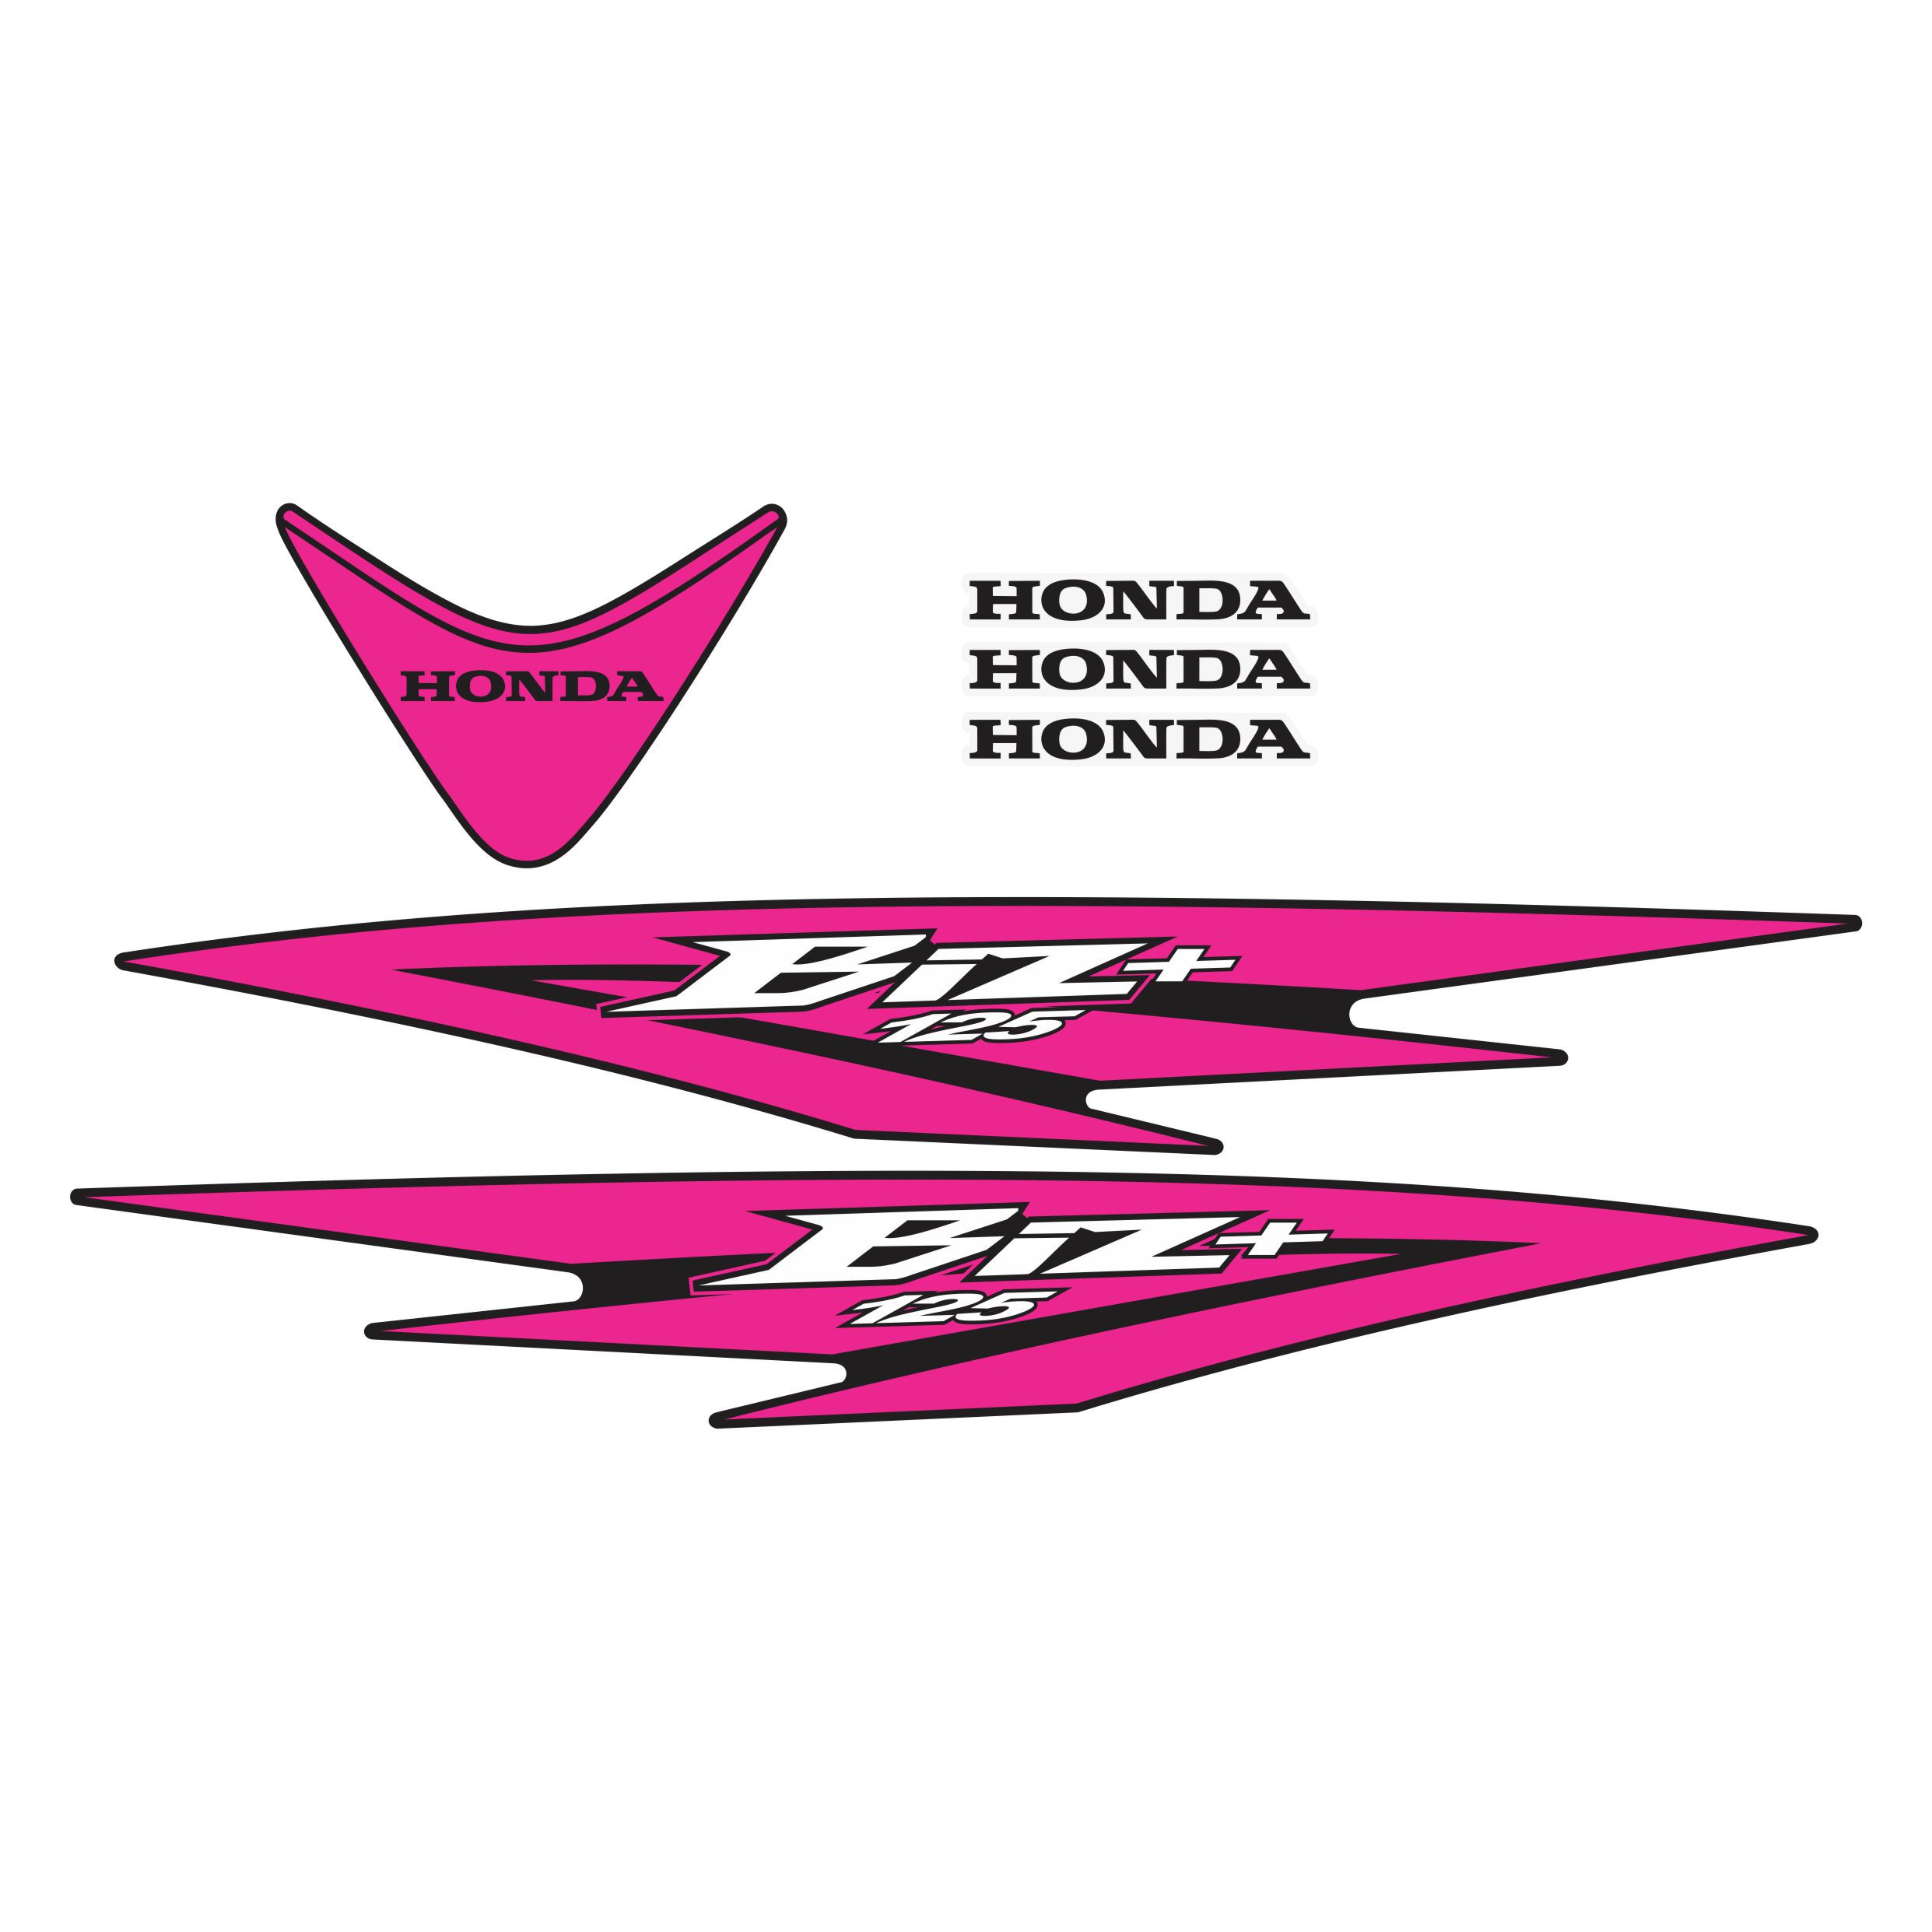 Adesivo Honda Biz 125 - 2 Adesivos Moto Honda 12 cores em Vinil